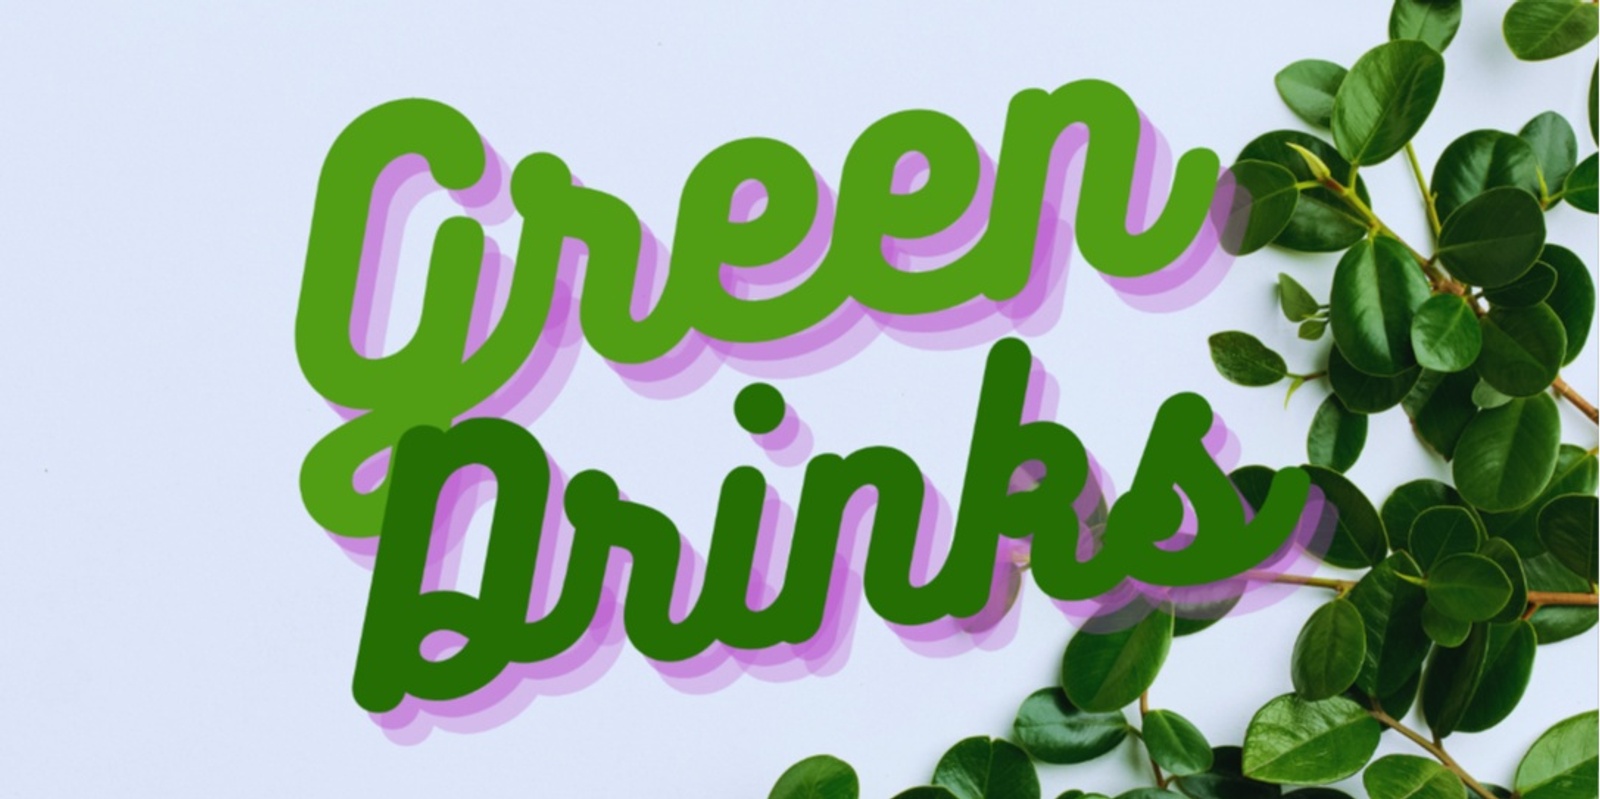 Banner image for Wellington Green Drinks - Ngahuru/Autumn Edition